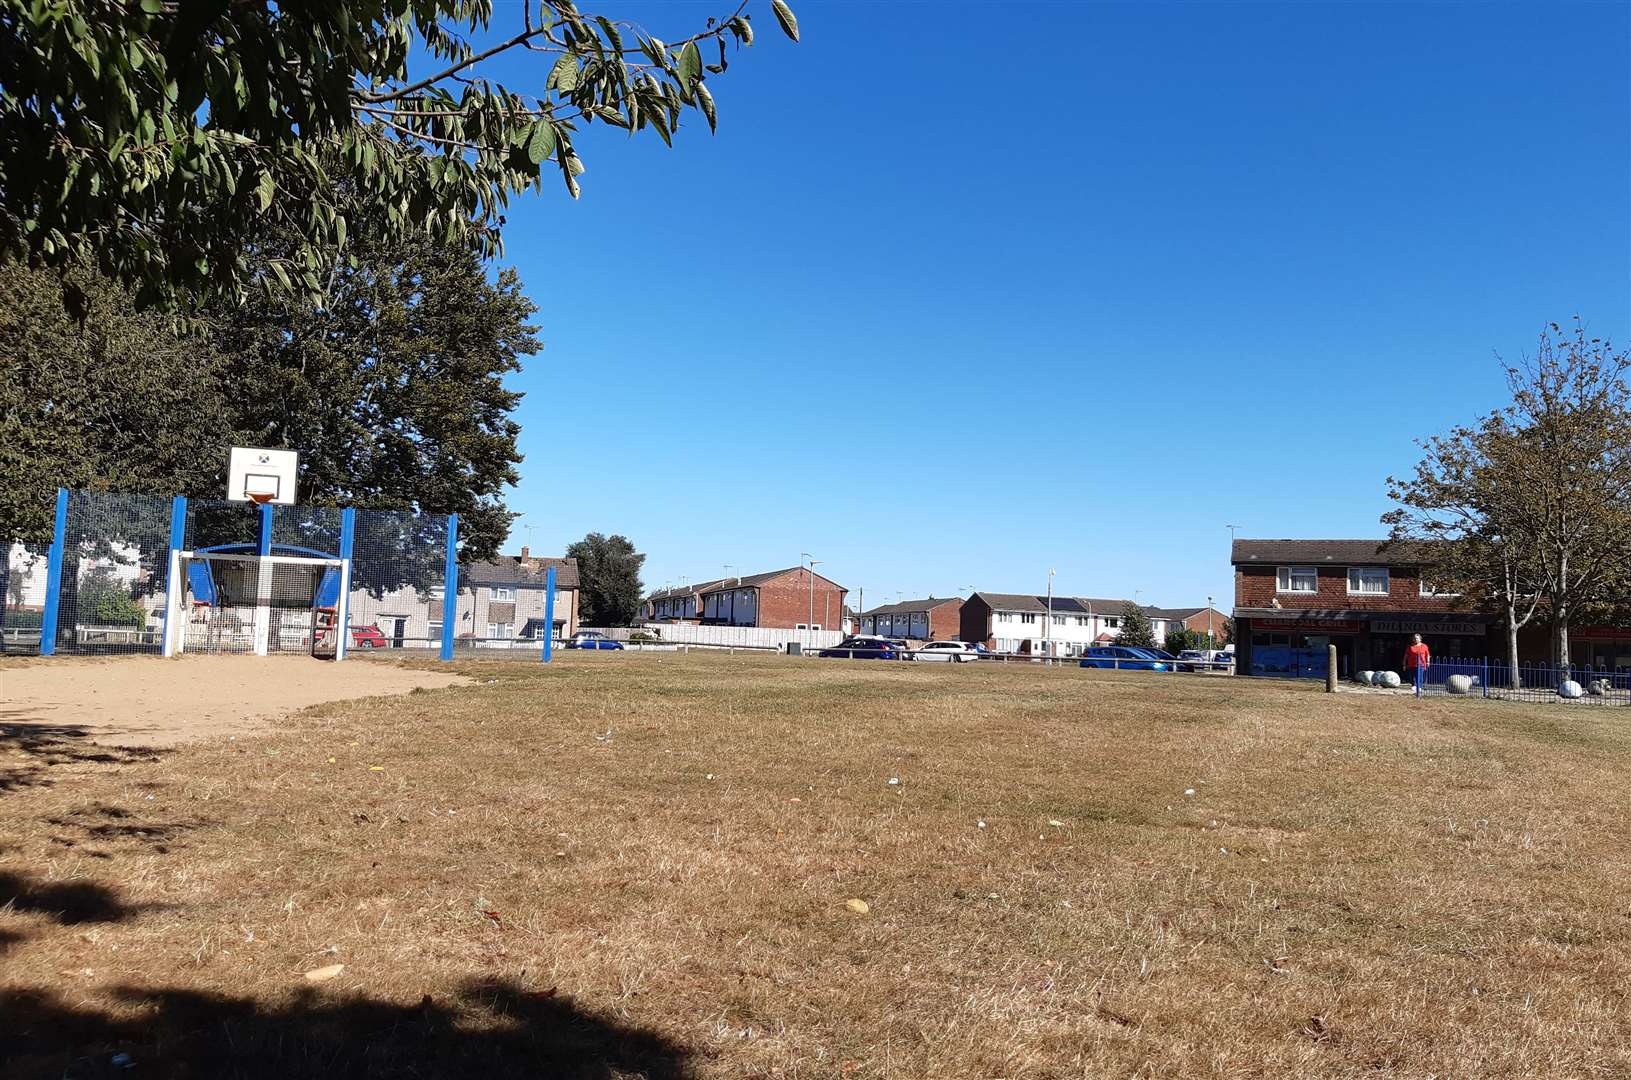 The site of the former Bockhanger Community Centre in Kennington